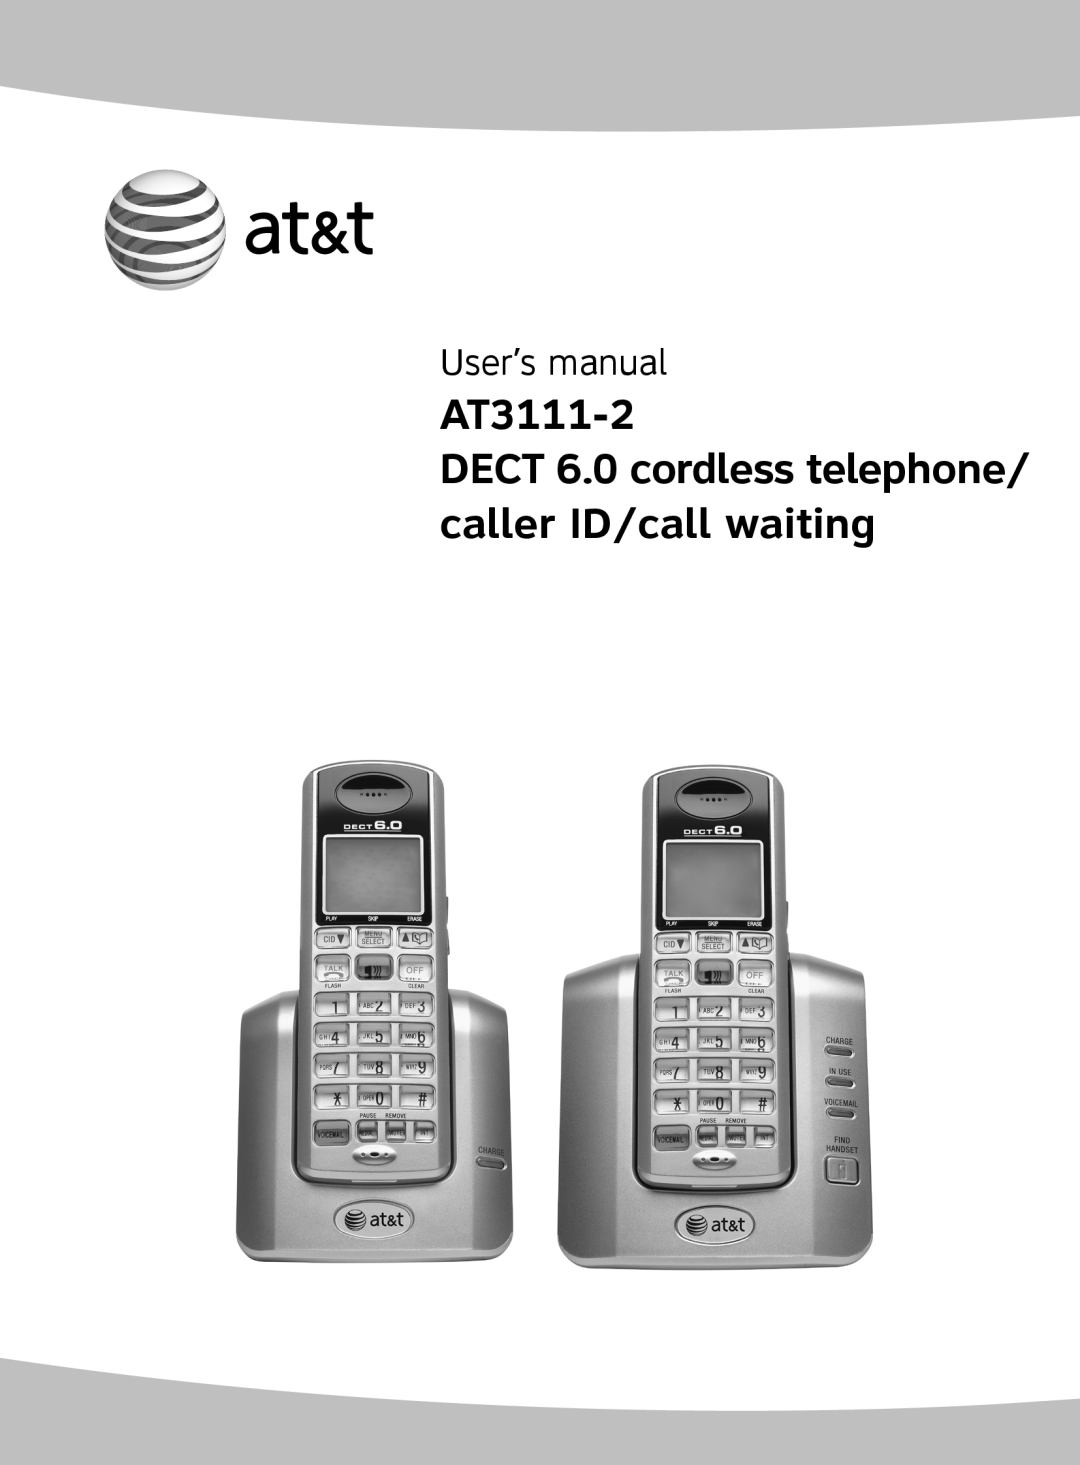 AT&T AT3111-2 user manual User’s manual 